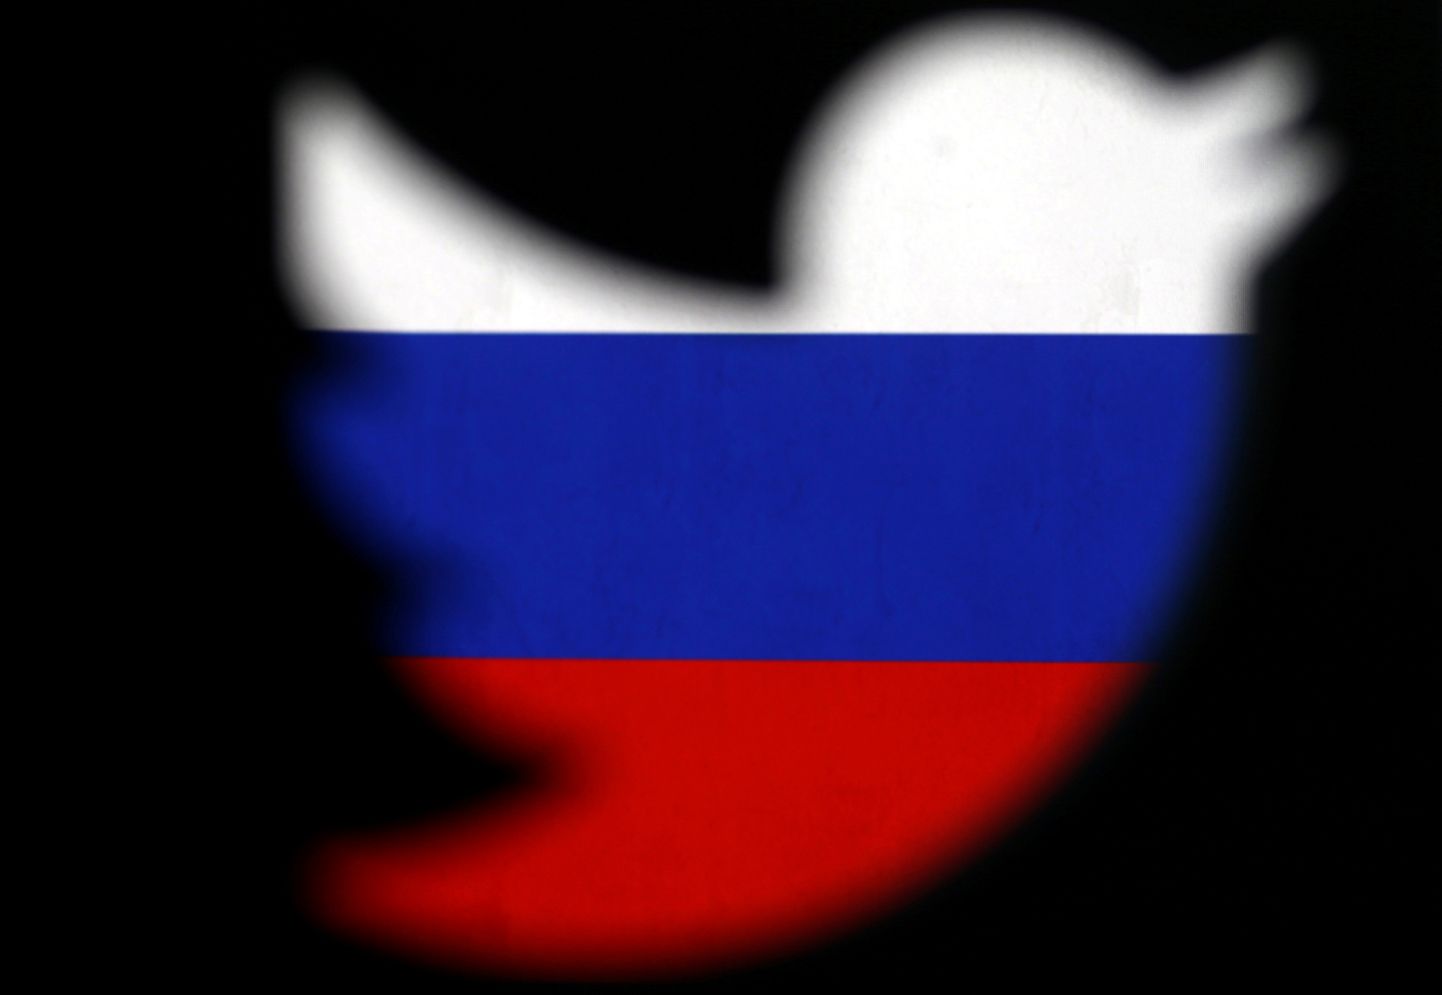 Логотип Twitter и российский флаг. Иллюстративное фото.